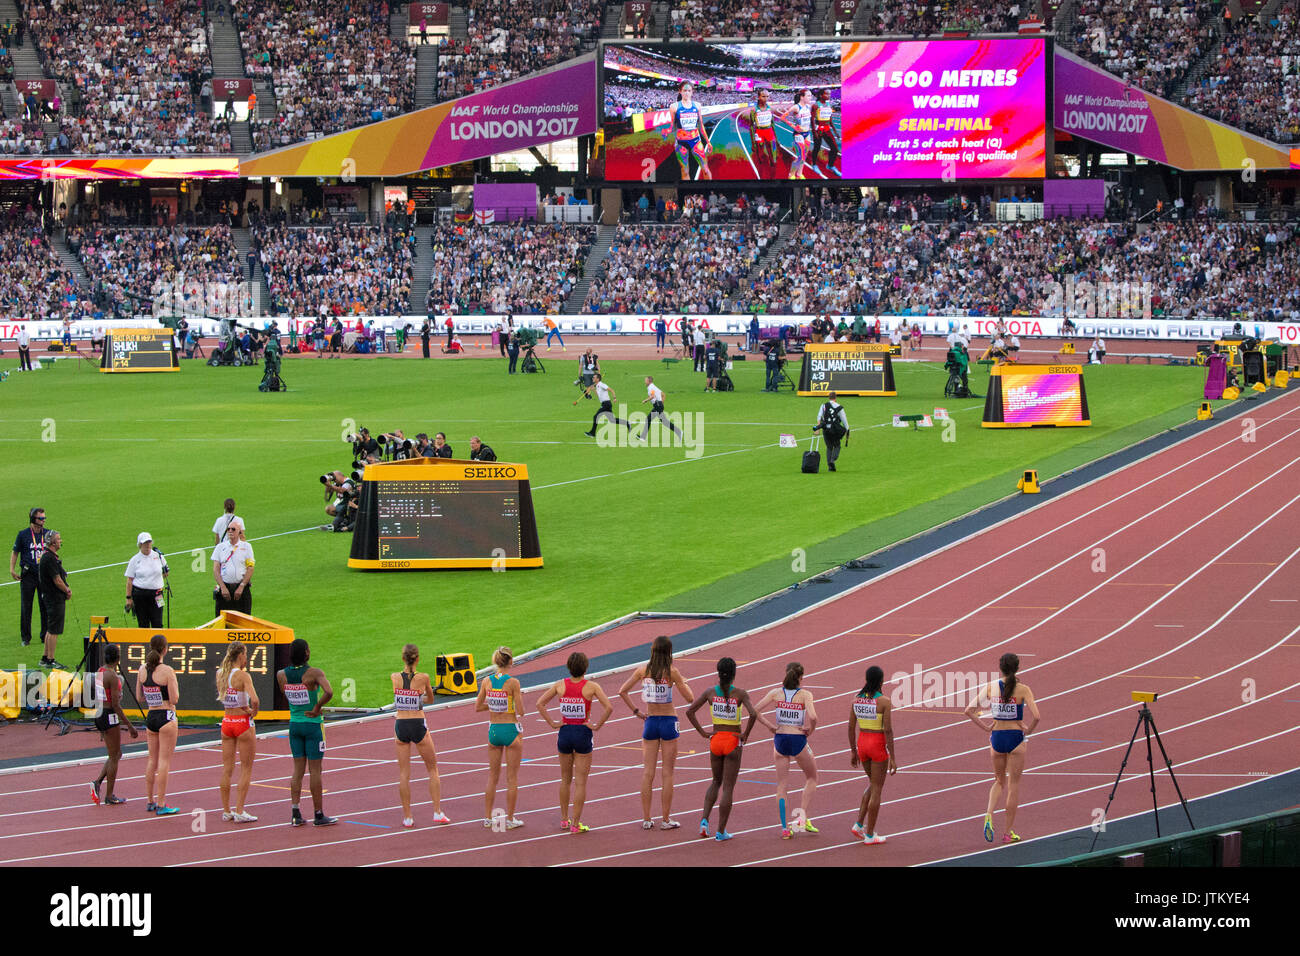 Championnats du monde d'athlétisme de l'IAAF, stade de Londres 2017 Banque D'Images